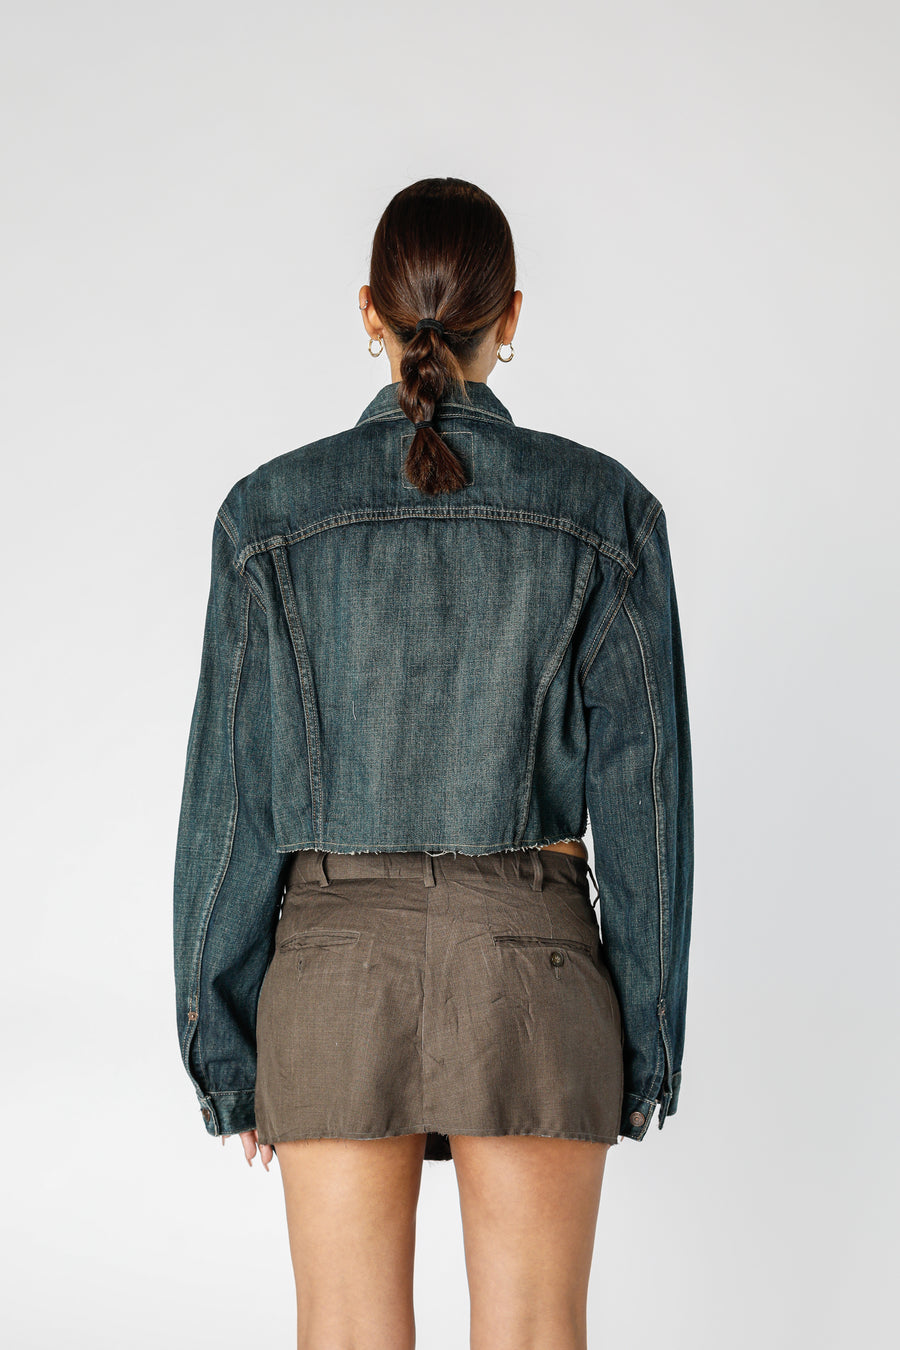 Rework Vintage Levi's Crop Denim Jacket - XL